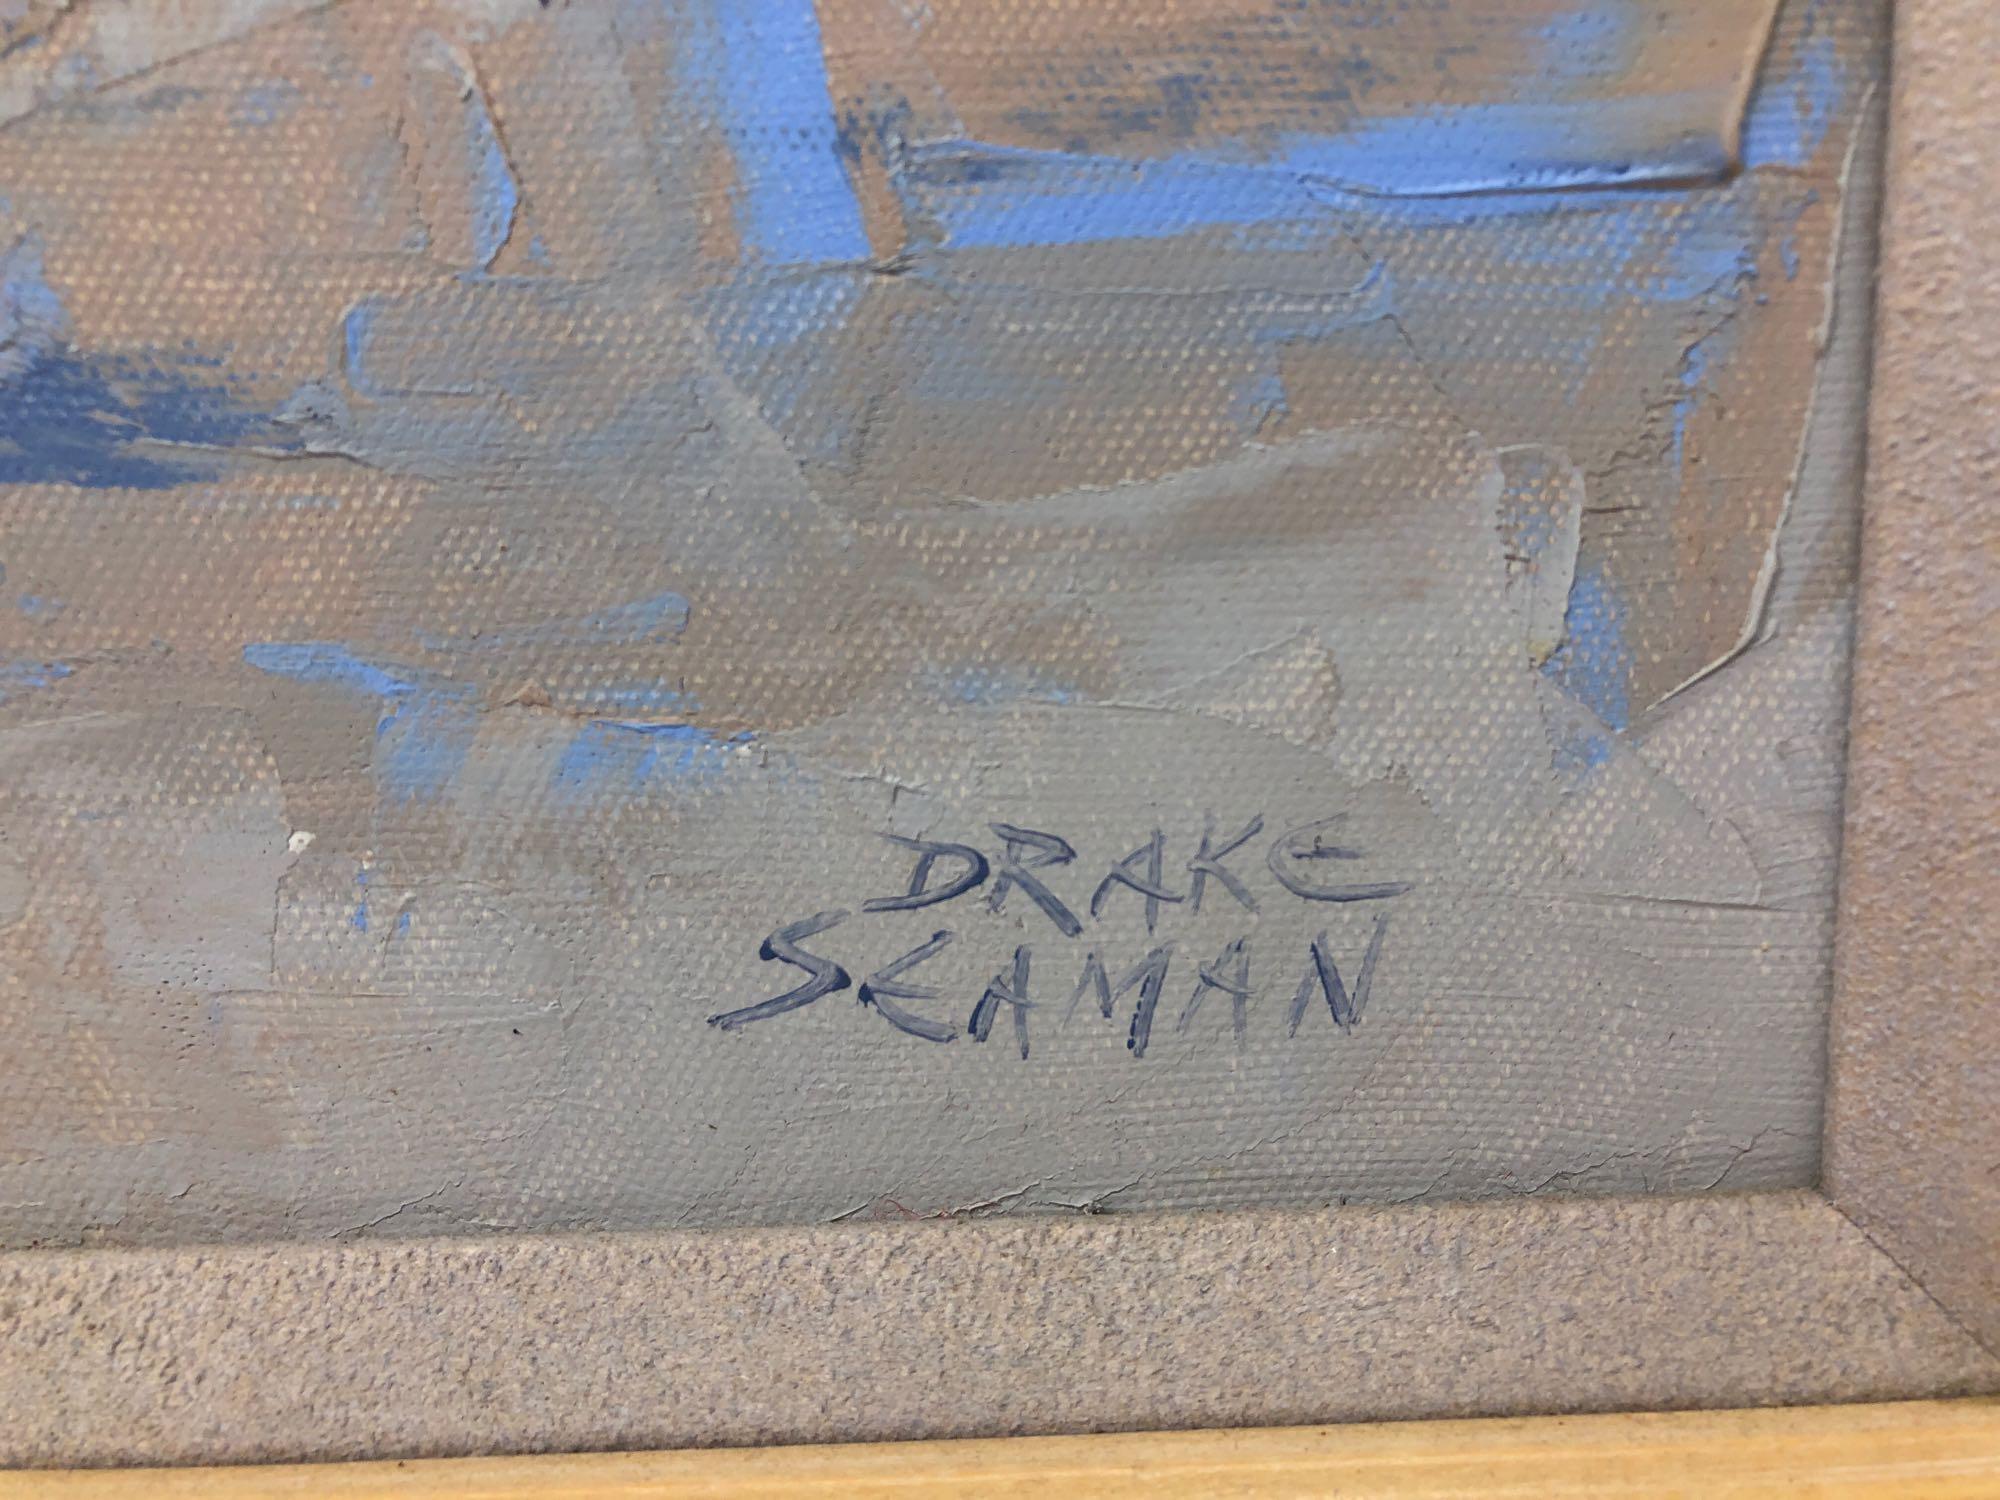 Signed & Framed Painting, Drake Seaman